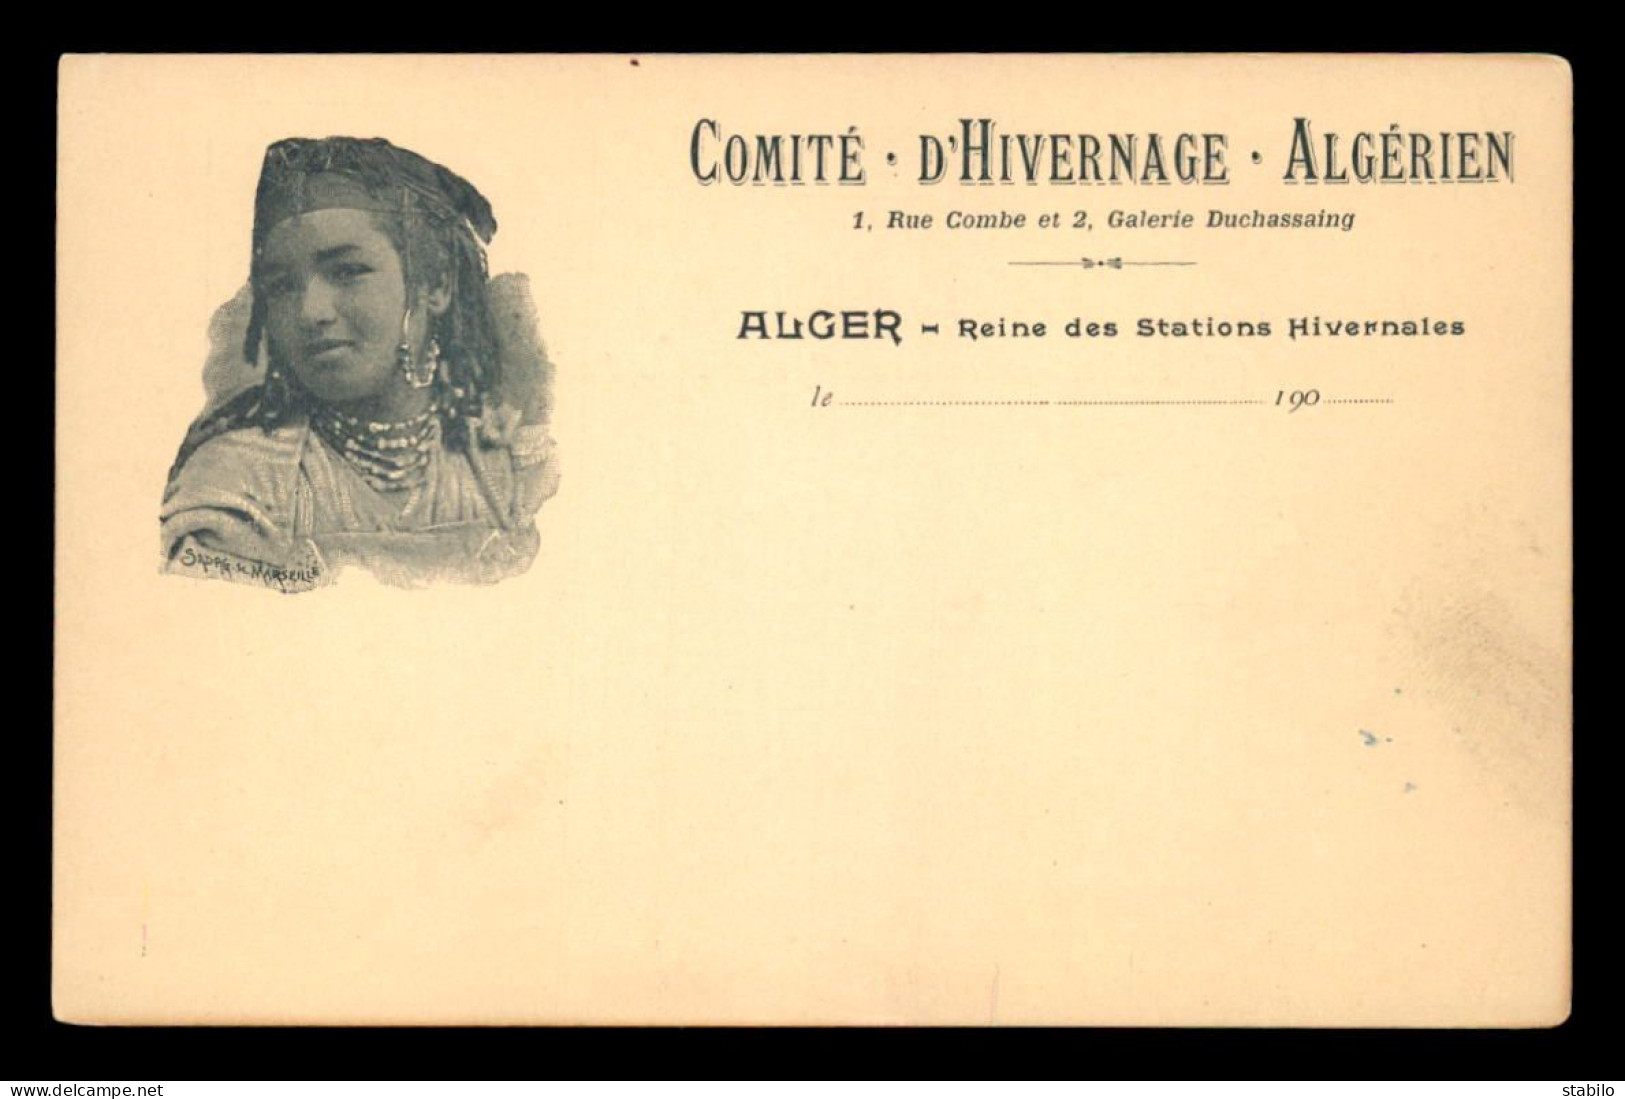 ALGERIE - ALGER - FEMME MAURESQUE - COMITE D'HIVERNAGE ALGERIEN, 1 RUE COMBE ET 2 GALERIE DUCHASSAING - Algeri